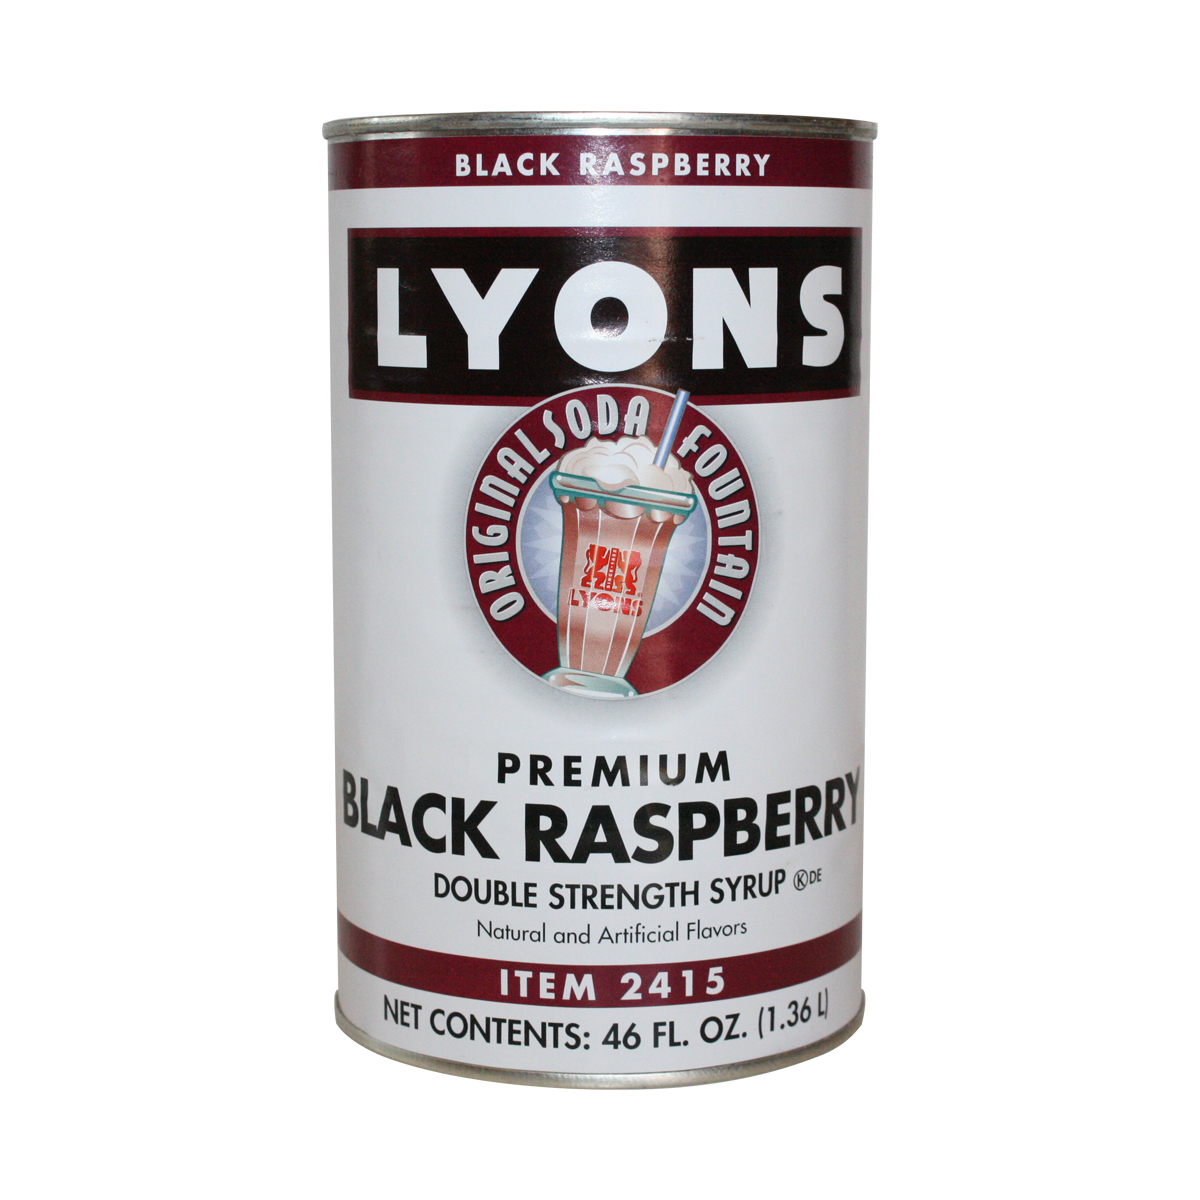 LYONS BLACK RASPBERRY 2X SHAKE
6/NO 5 DOUBLE USE 1/2 OZ PER
16 OZ